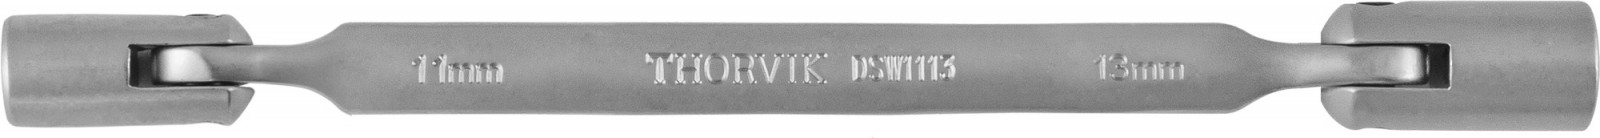 Купить DSW1113  гаечный карданный, 11х13 мм Thorvik за 405 руб. в .